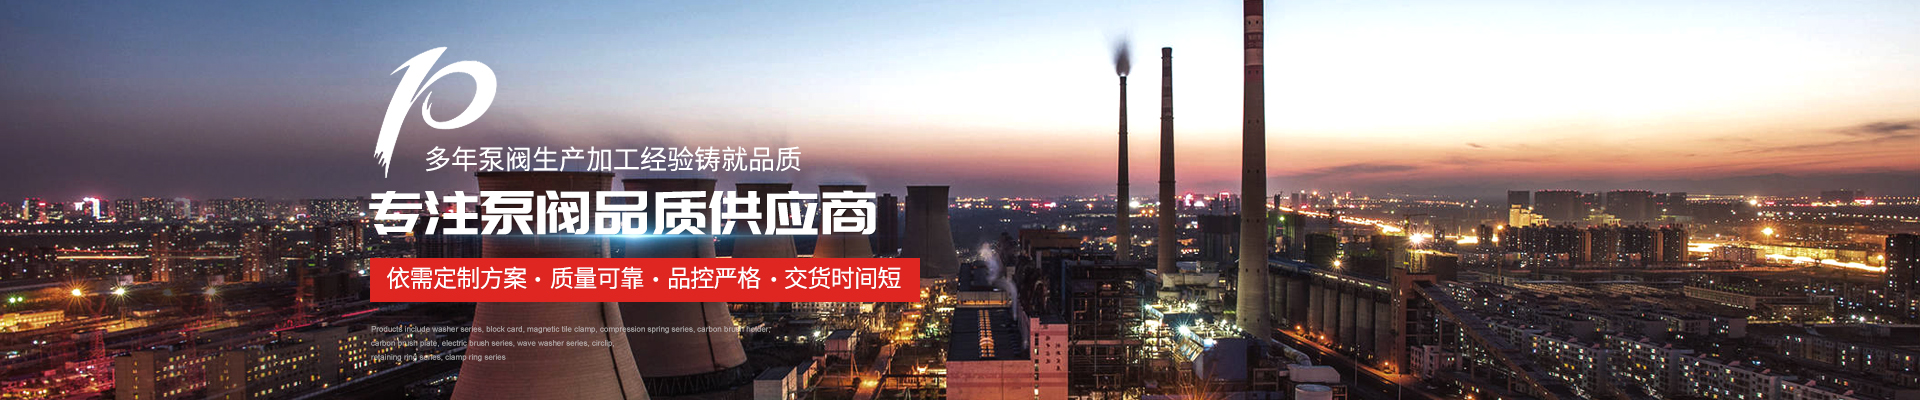 3CF消防控制柜廠家工廠車間展示 - 上海高適泵閥有限公司